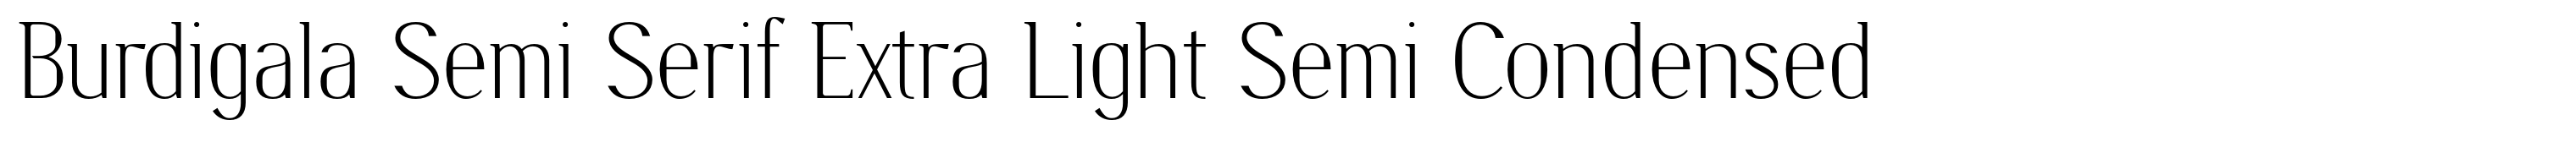 Burdigala Semi Serif Extra Light Semi Condensed